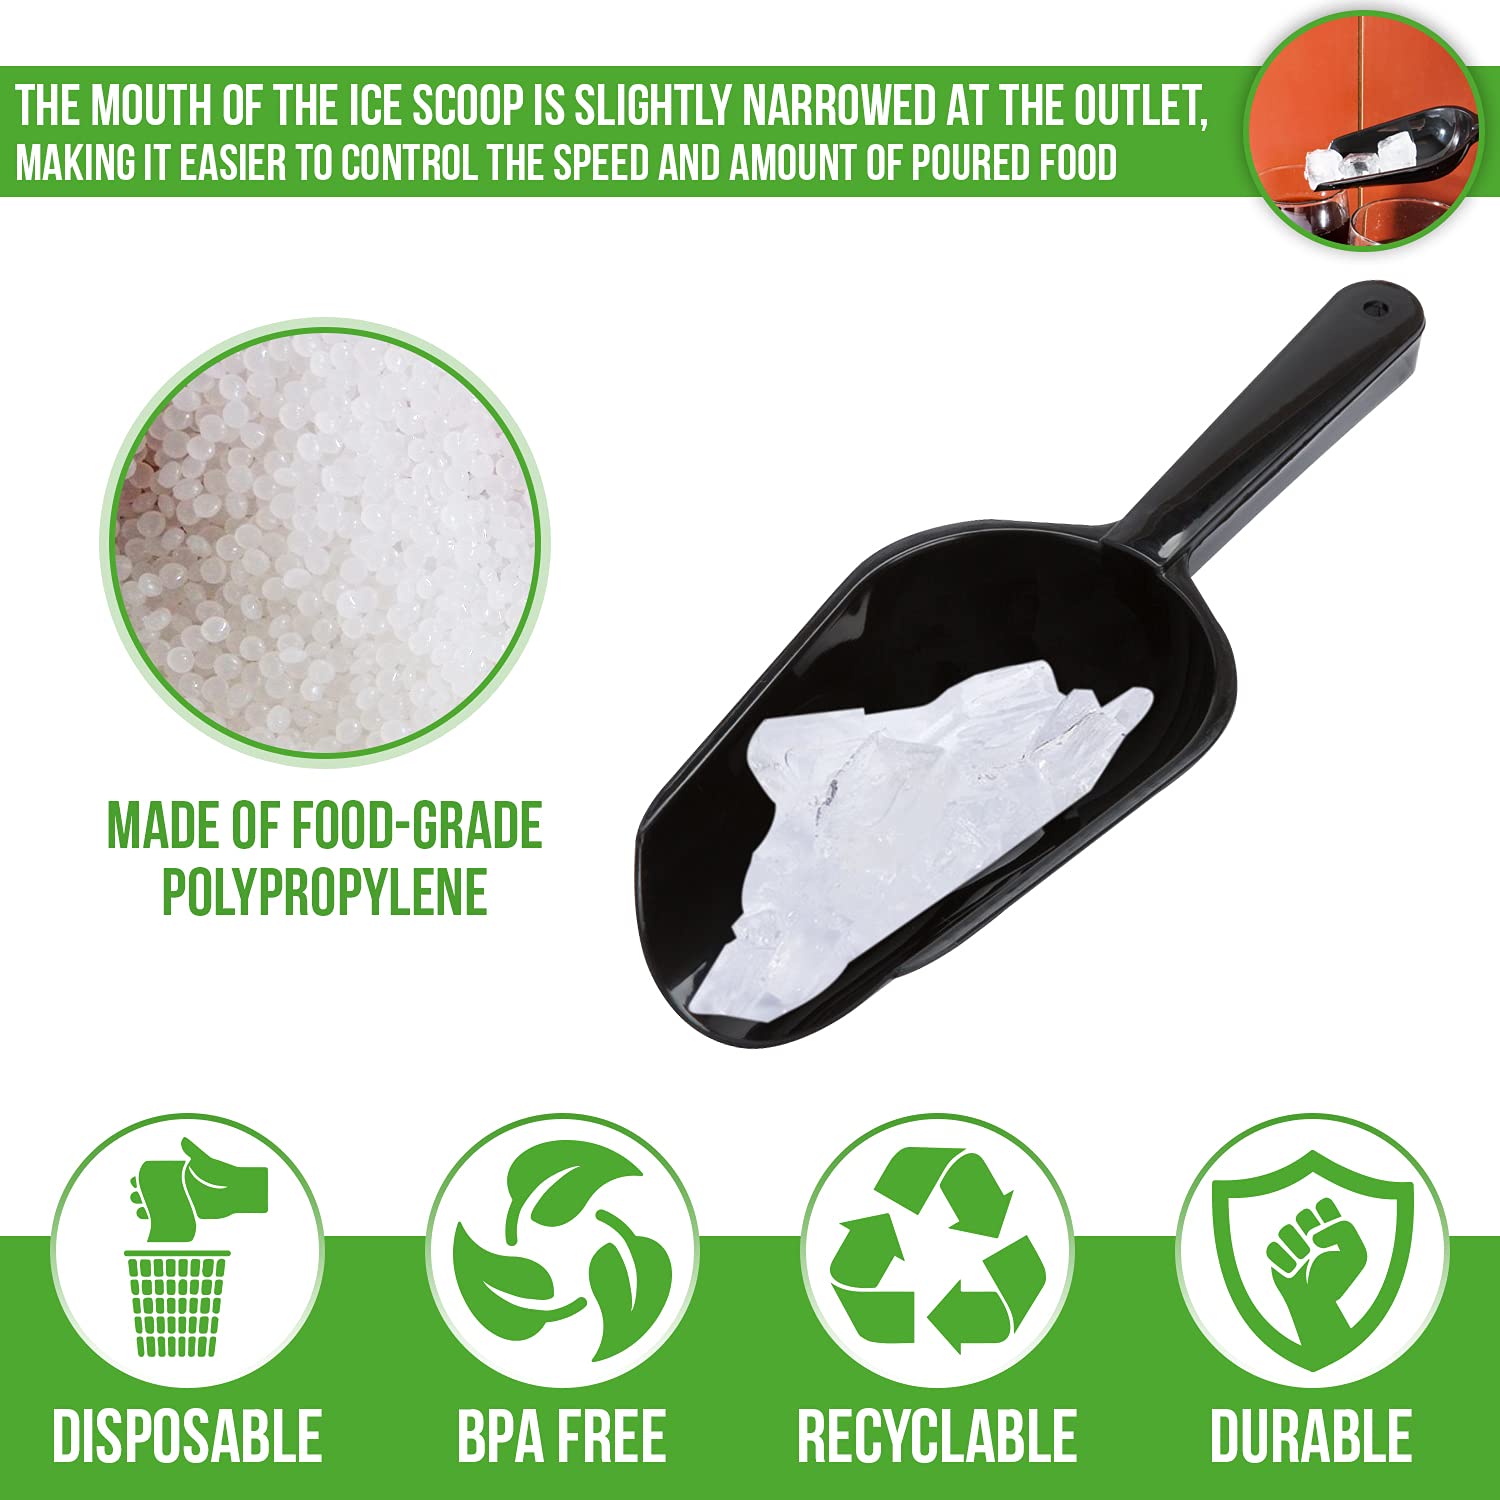 Ice hygiene: avoid the poop – use a scoop